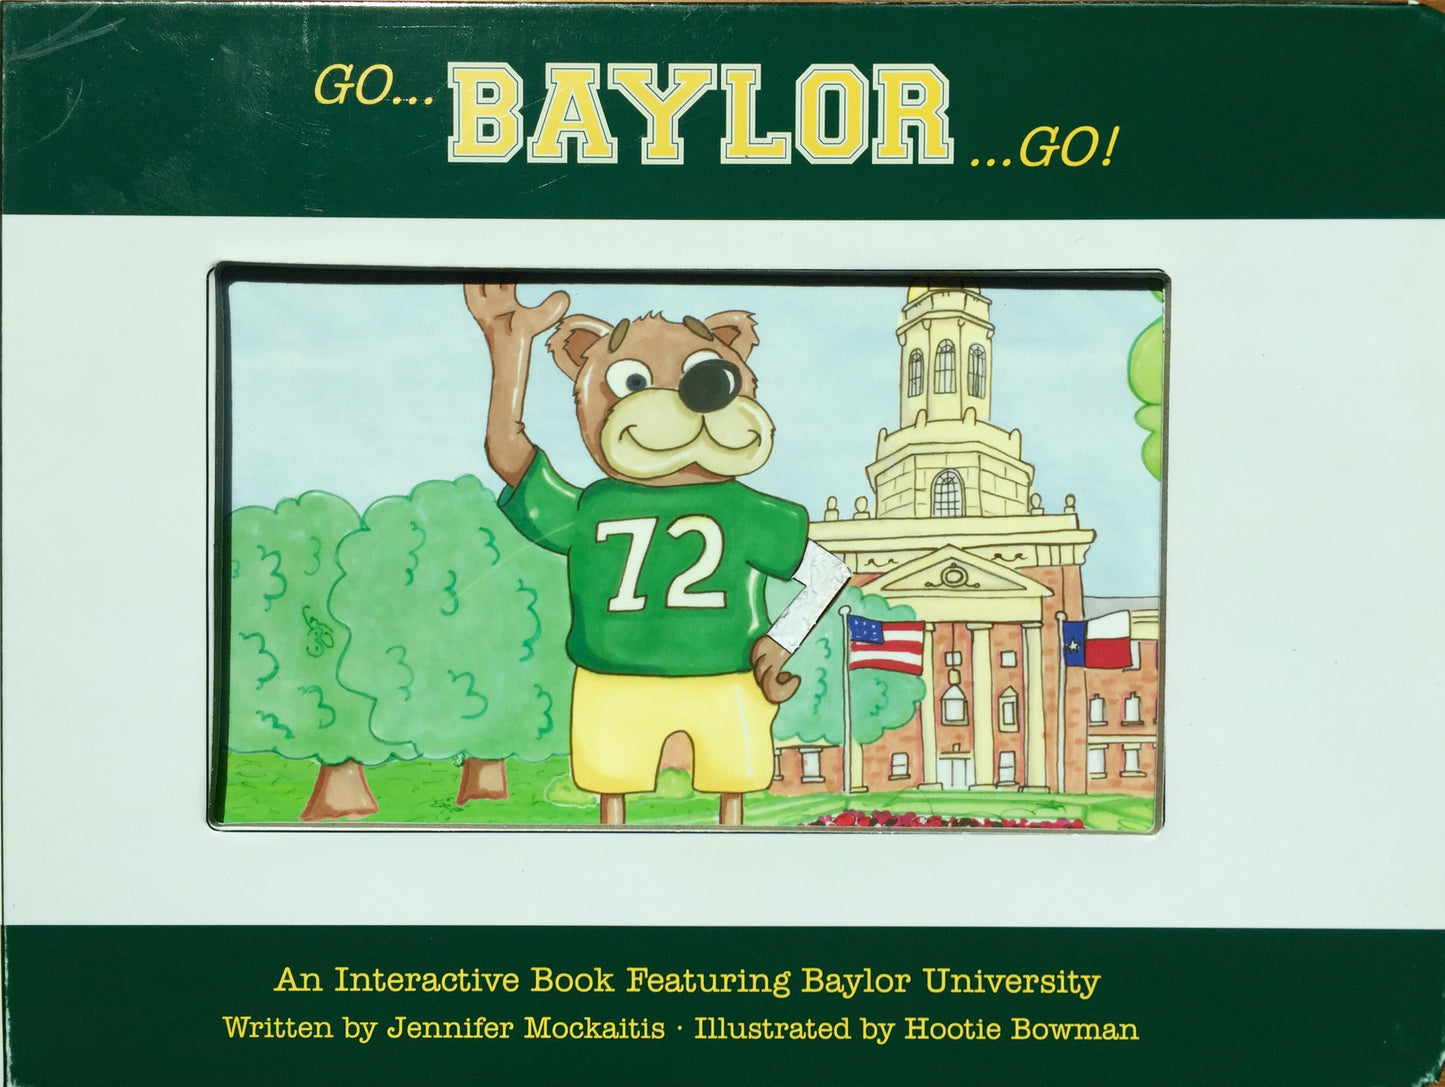 Go Baylor Go! - Baylor University Interactive Children's Book